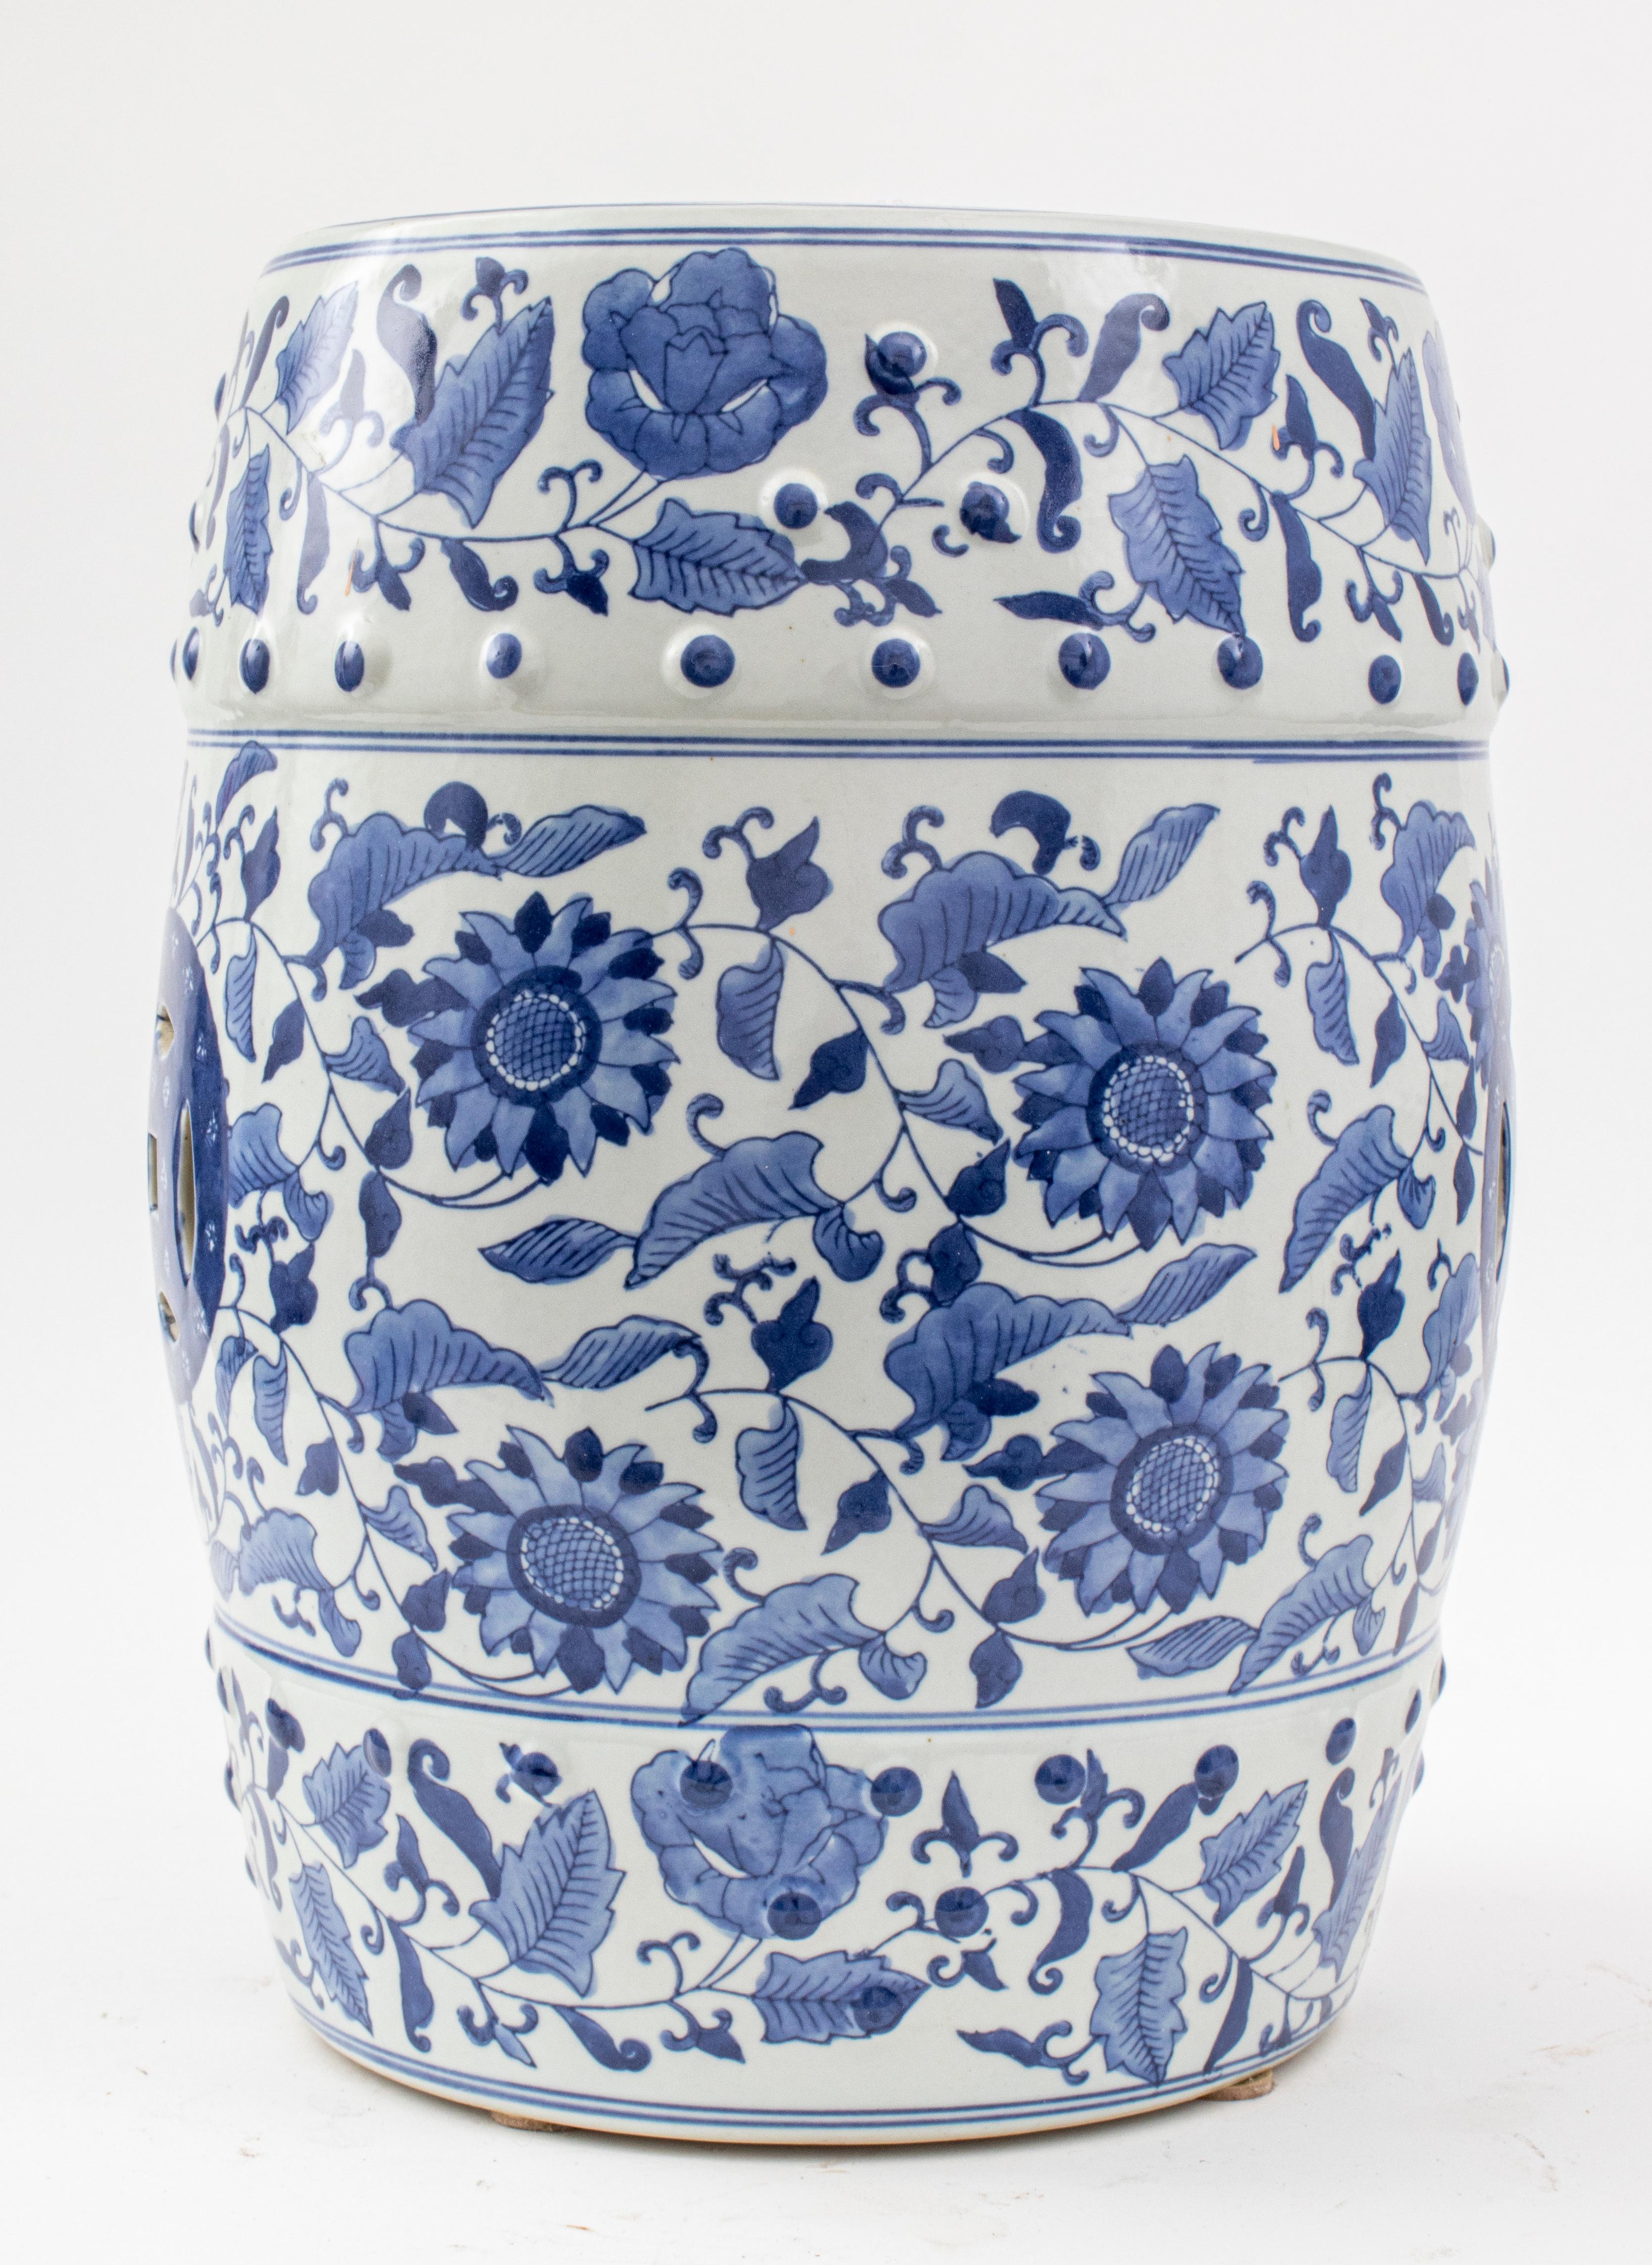 International Style Chinese Blue and White Glazed Ceramic Garden Seat